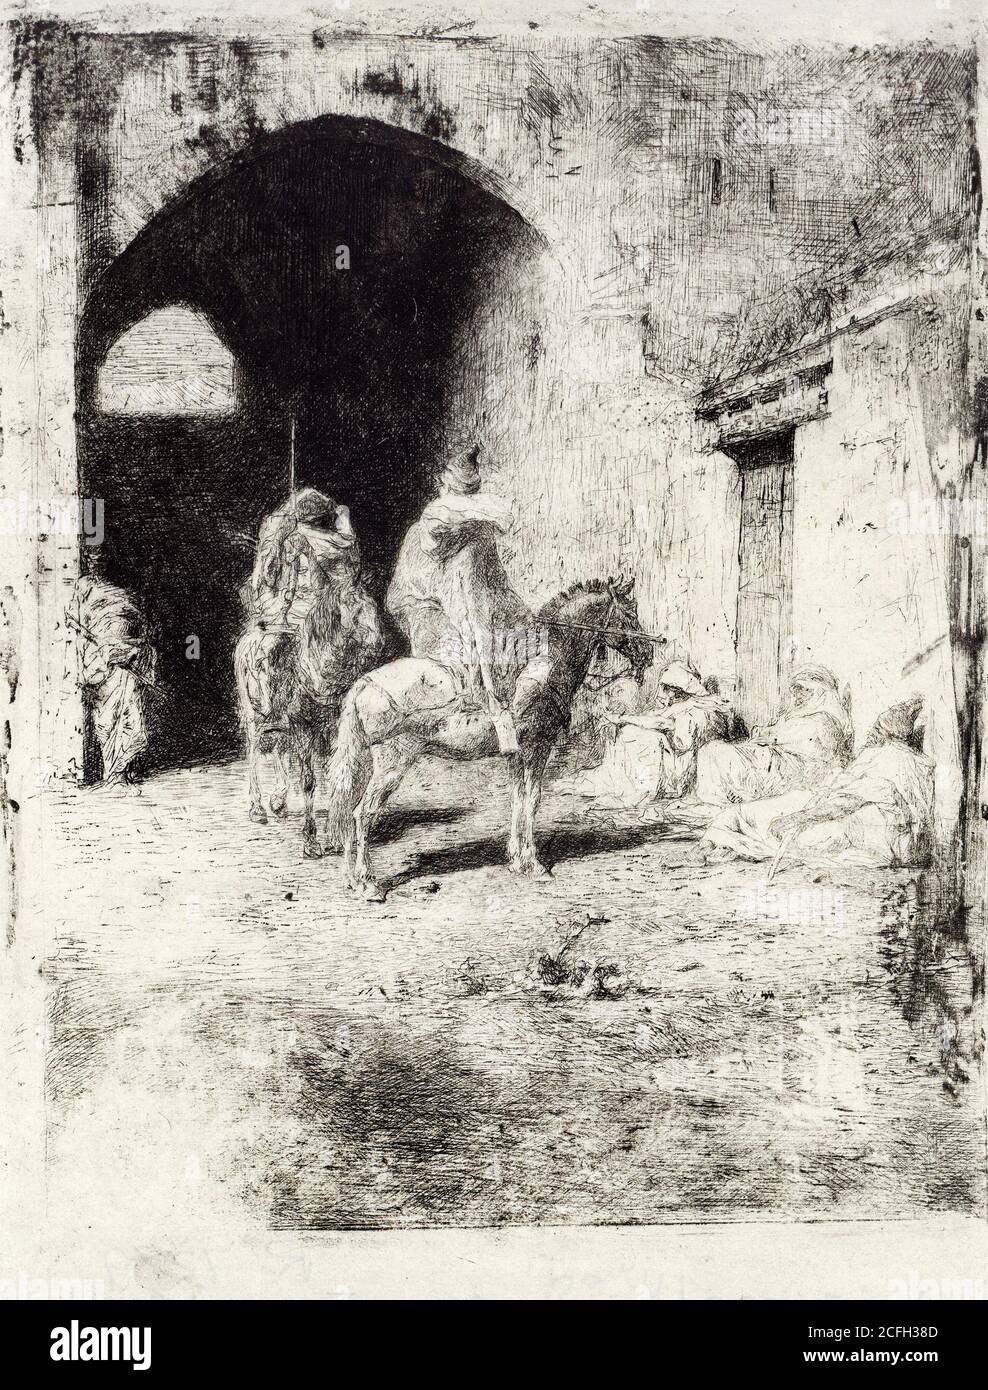 Maria Fortuny, Casbah Guard in Tetouan, Circa 1861, Etching on paper, Museu Nacional d'Art de Catalunya, Barcelona, Spain. Stock Photo